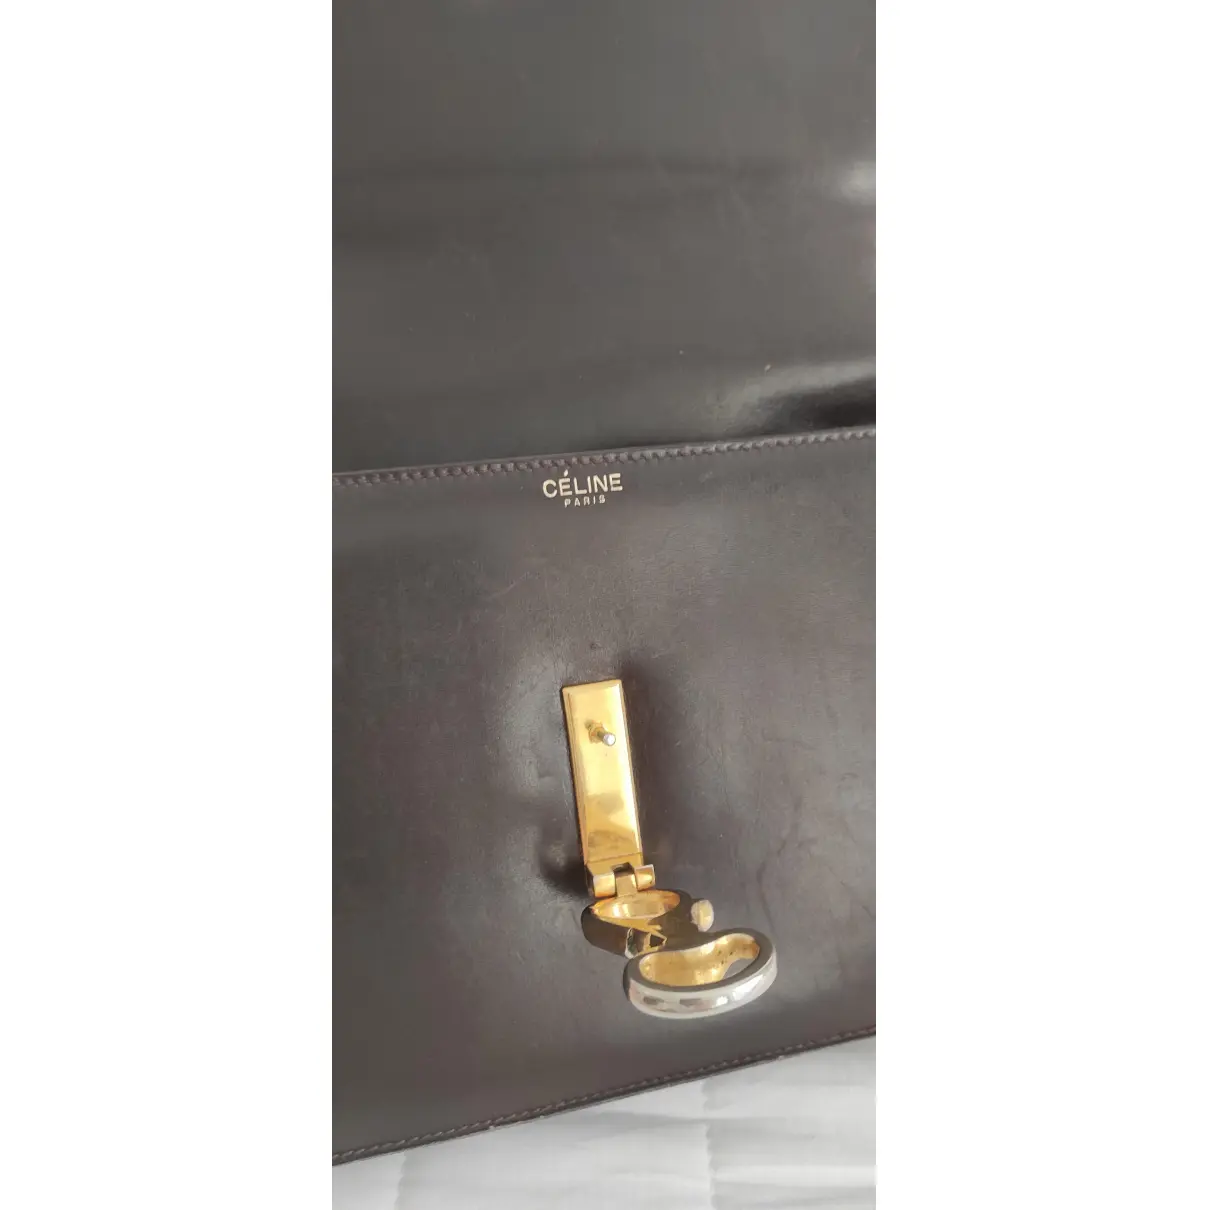 Crécy Vintage leather handbag Celine - Vintage